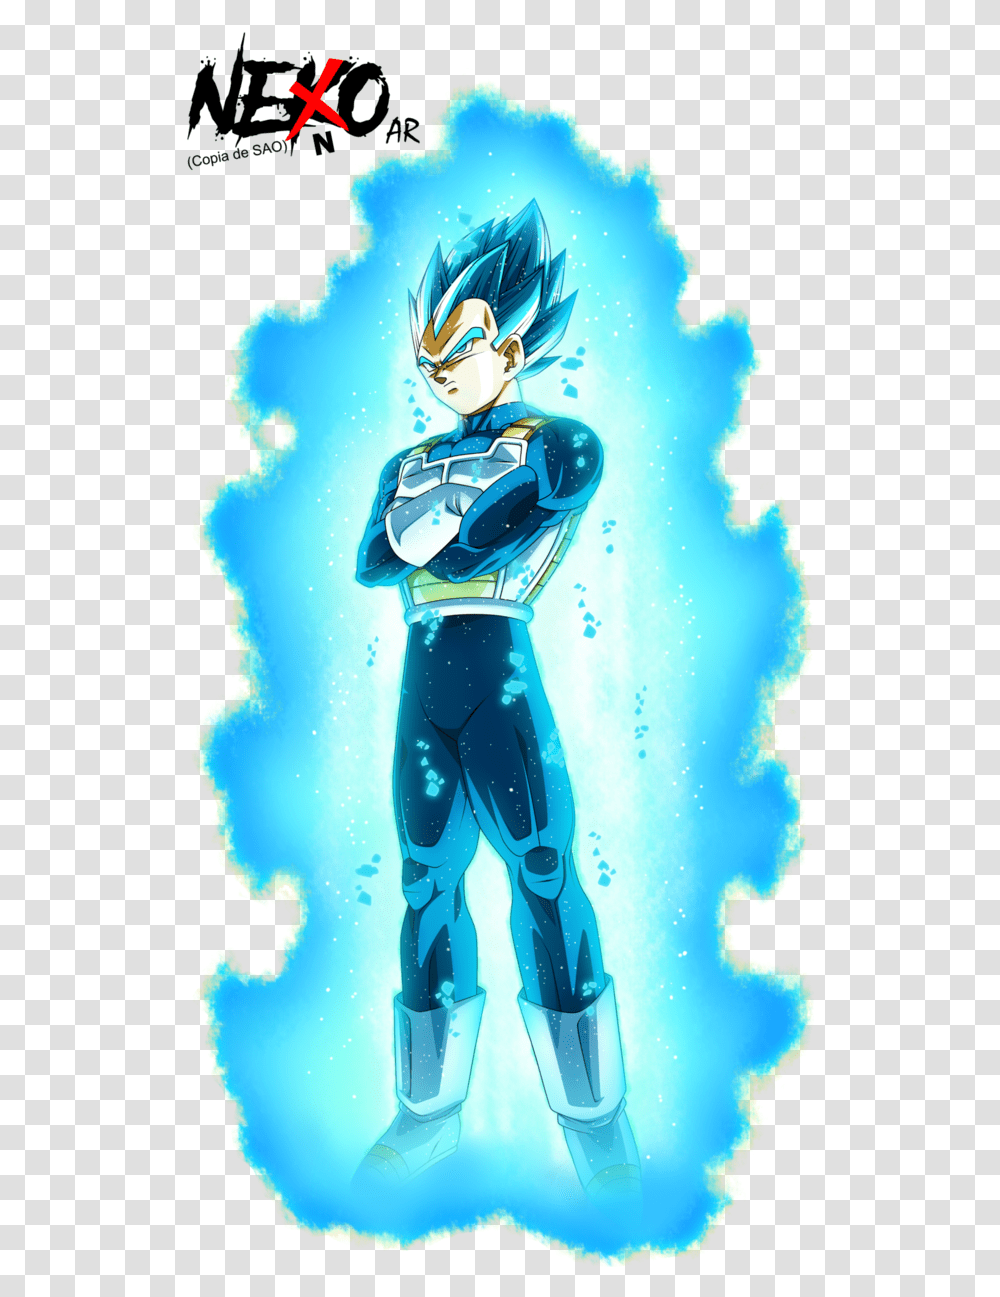 Super Saiyan Blue Vegita By Nekoar Goku Super Saiyan Blue Aura, Person, Outdoors Transparent Png